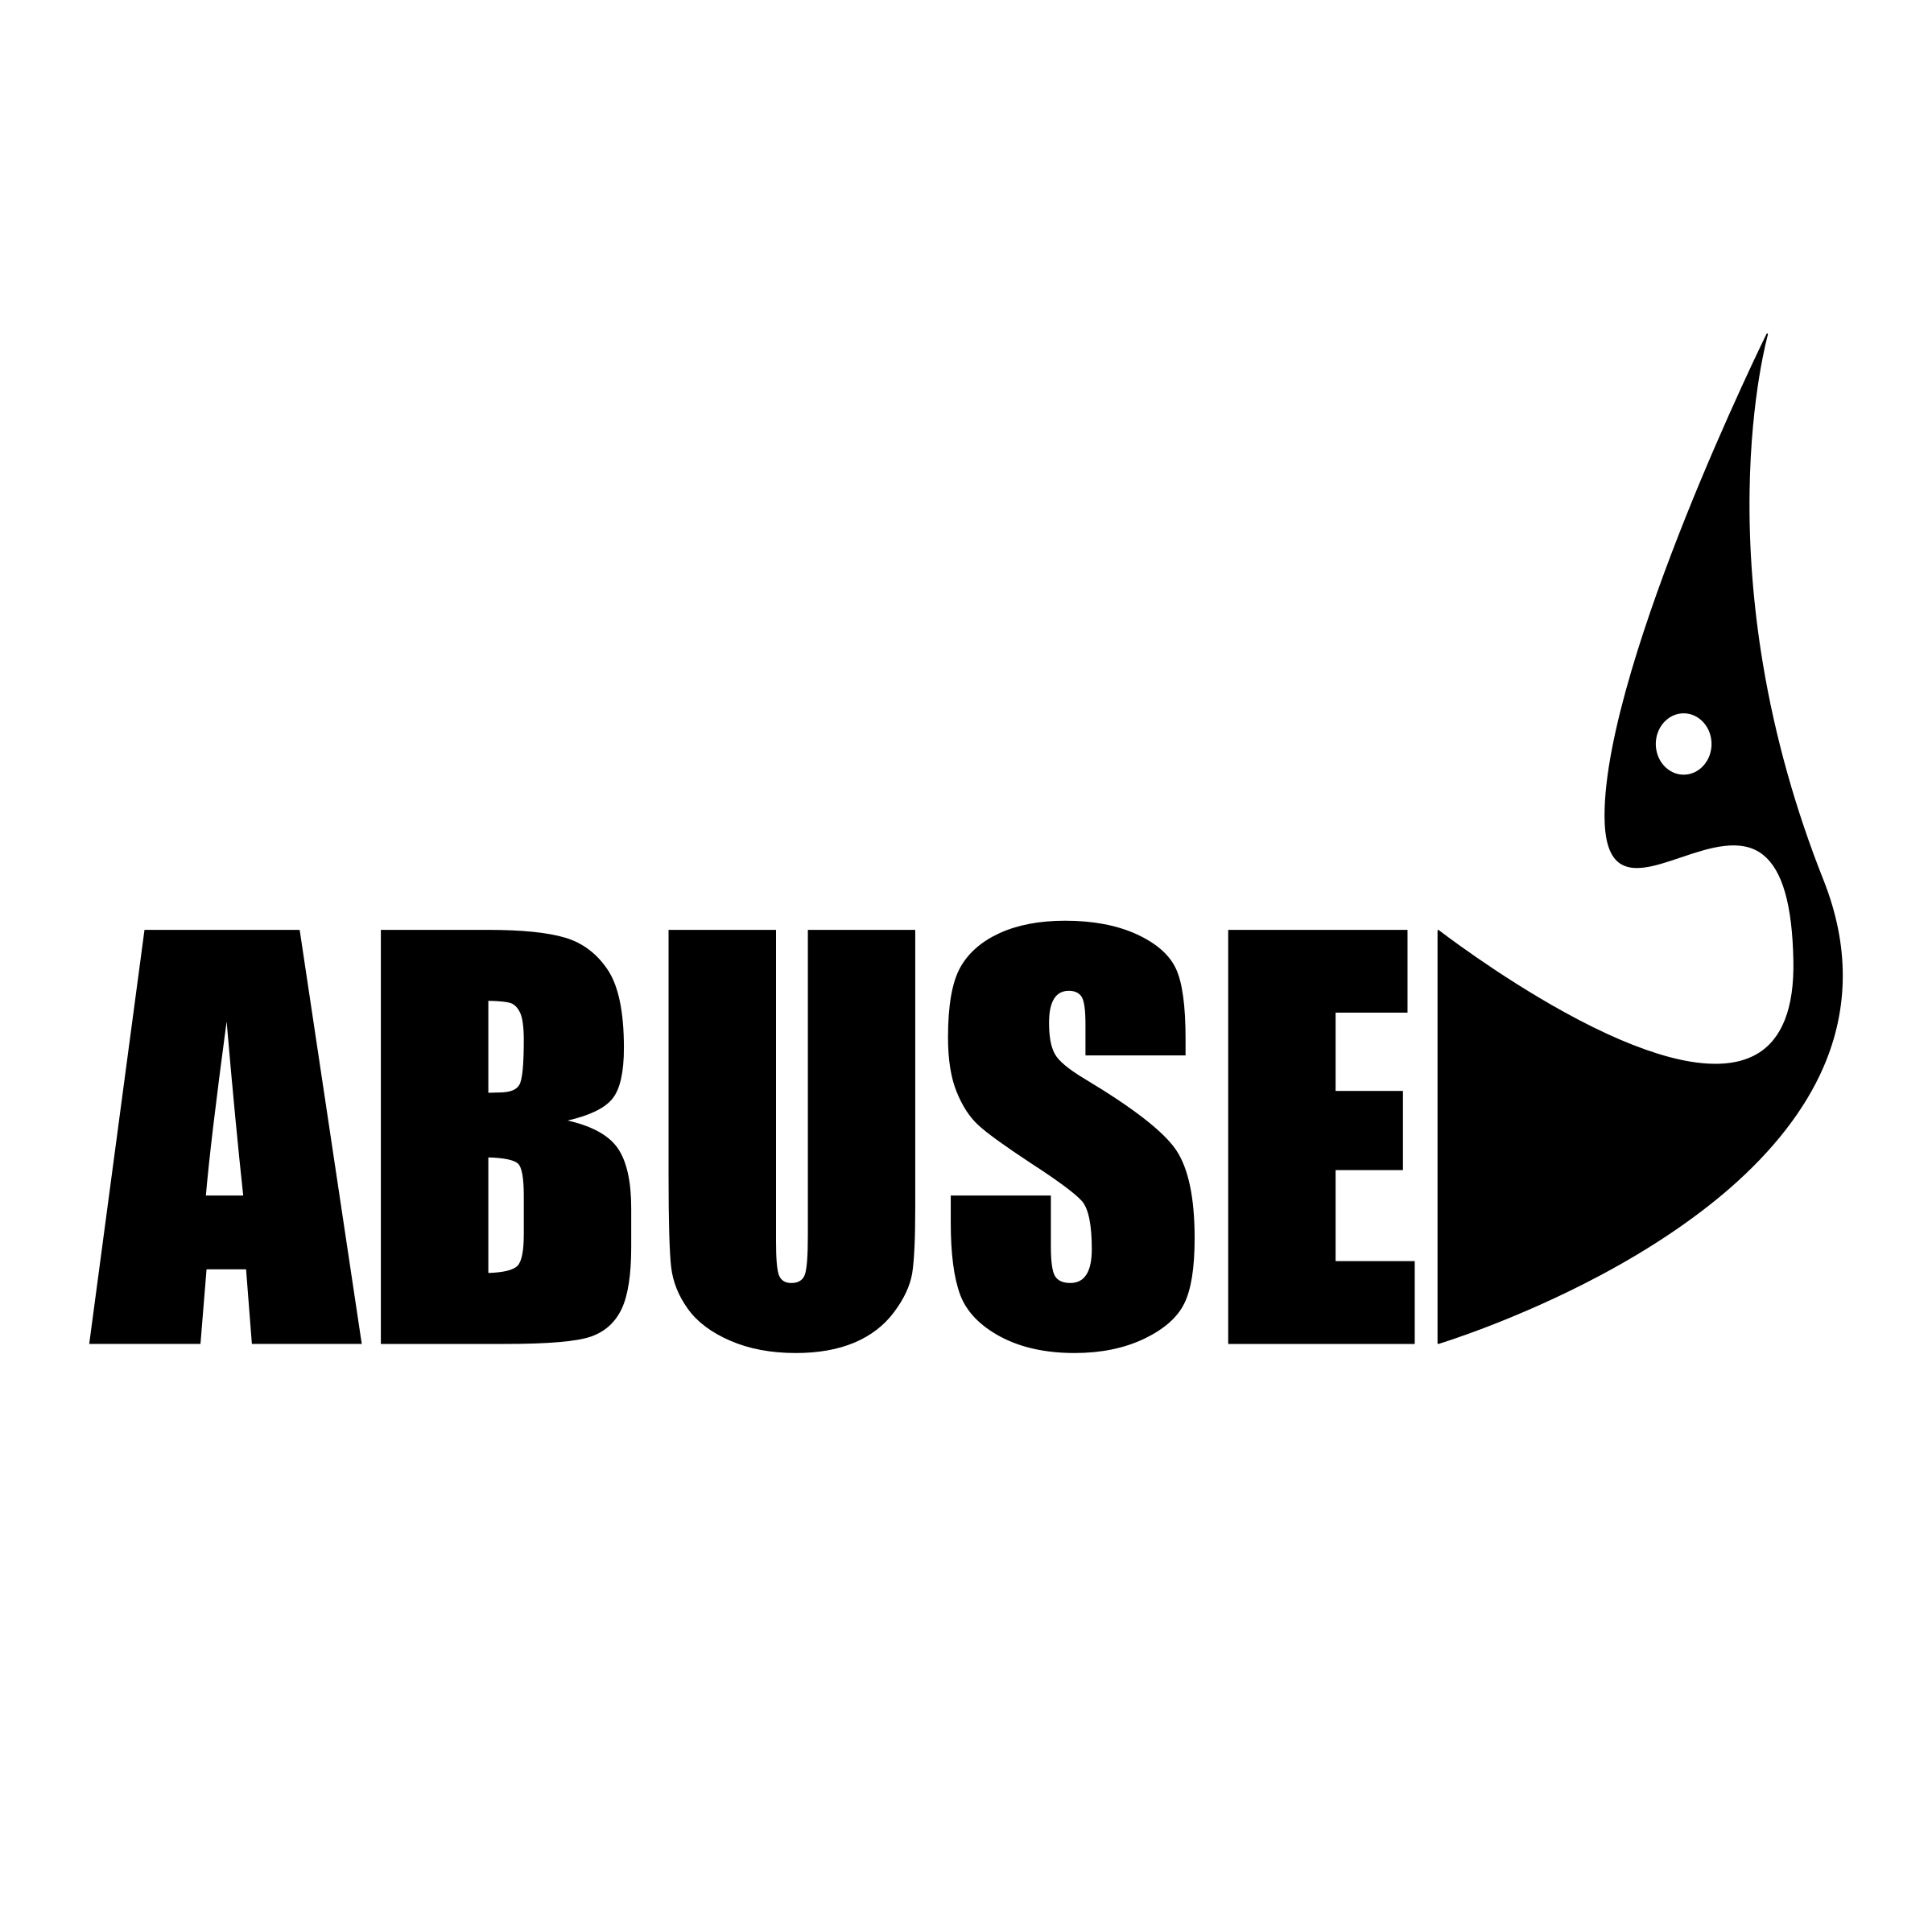 Abuse Logo - Abuse Logo PNG Transparent & SVG Vector - Freebie Supply